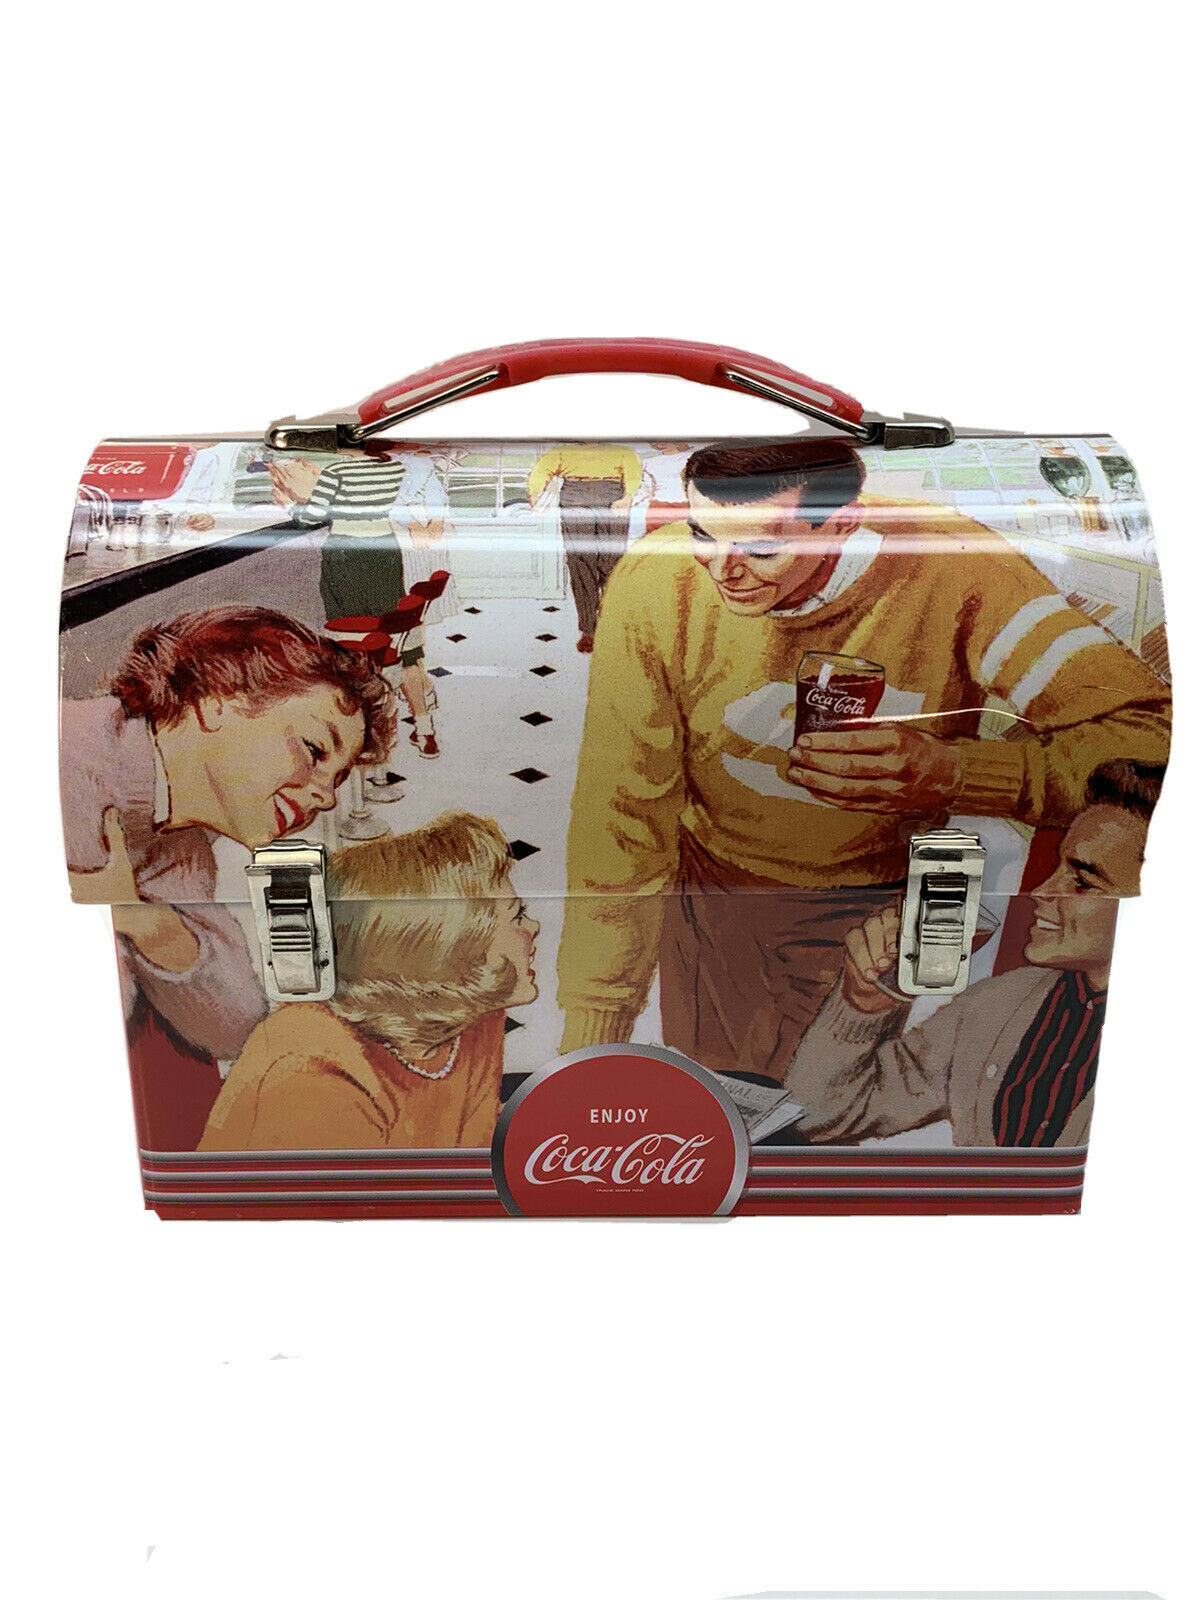 2009 Coca-cola Brand Tin Box Lunch Box Pail Steel Metal Some Minor Dents